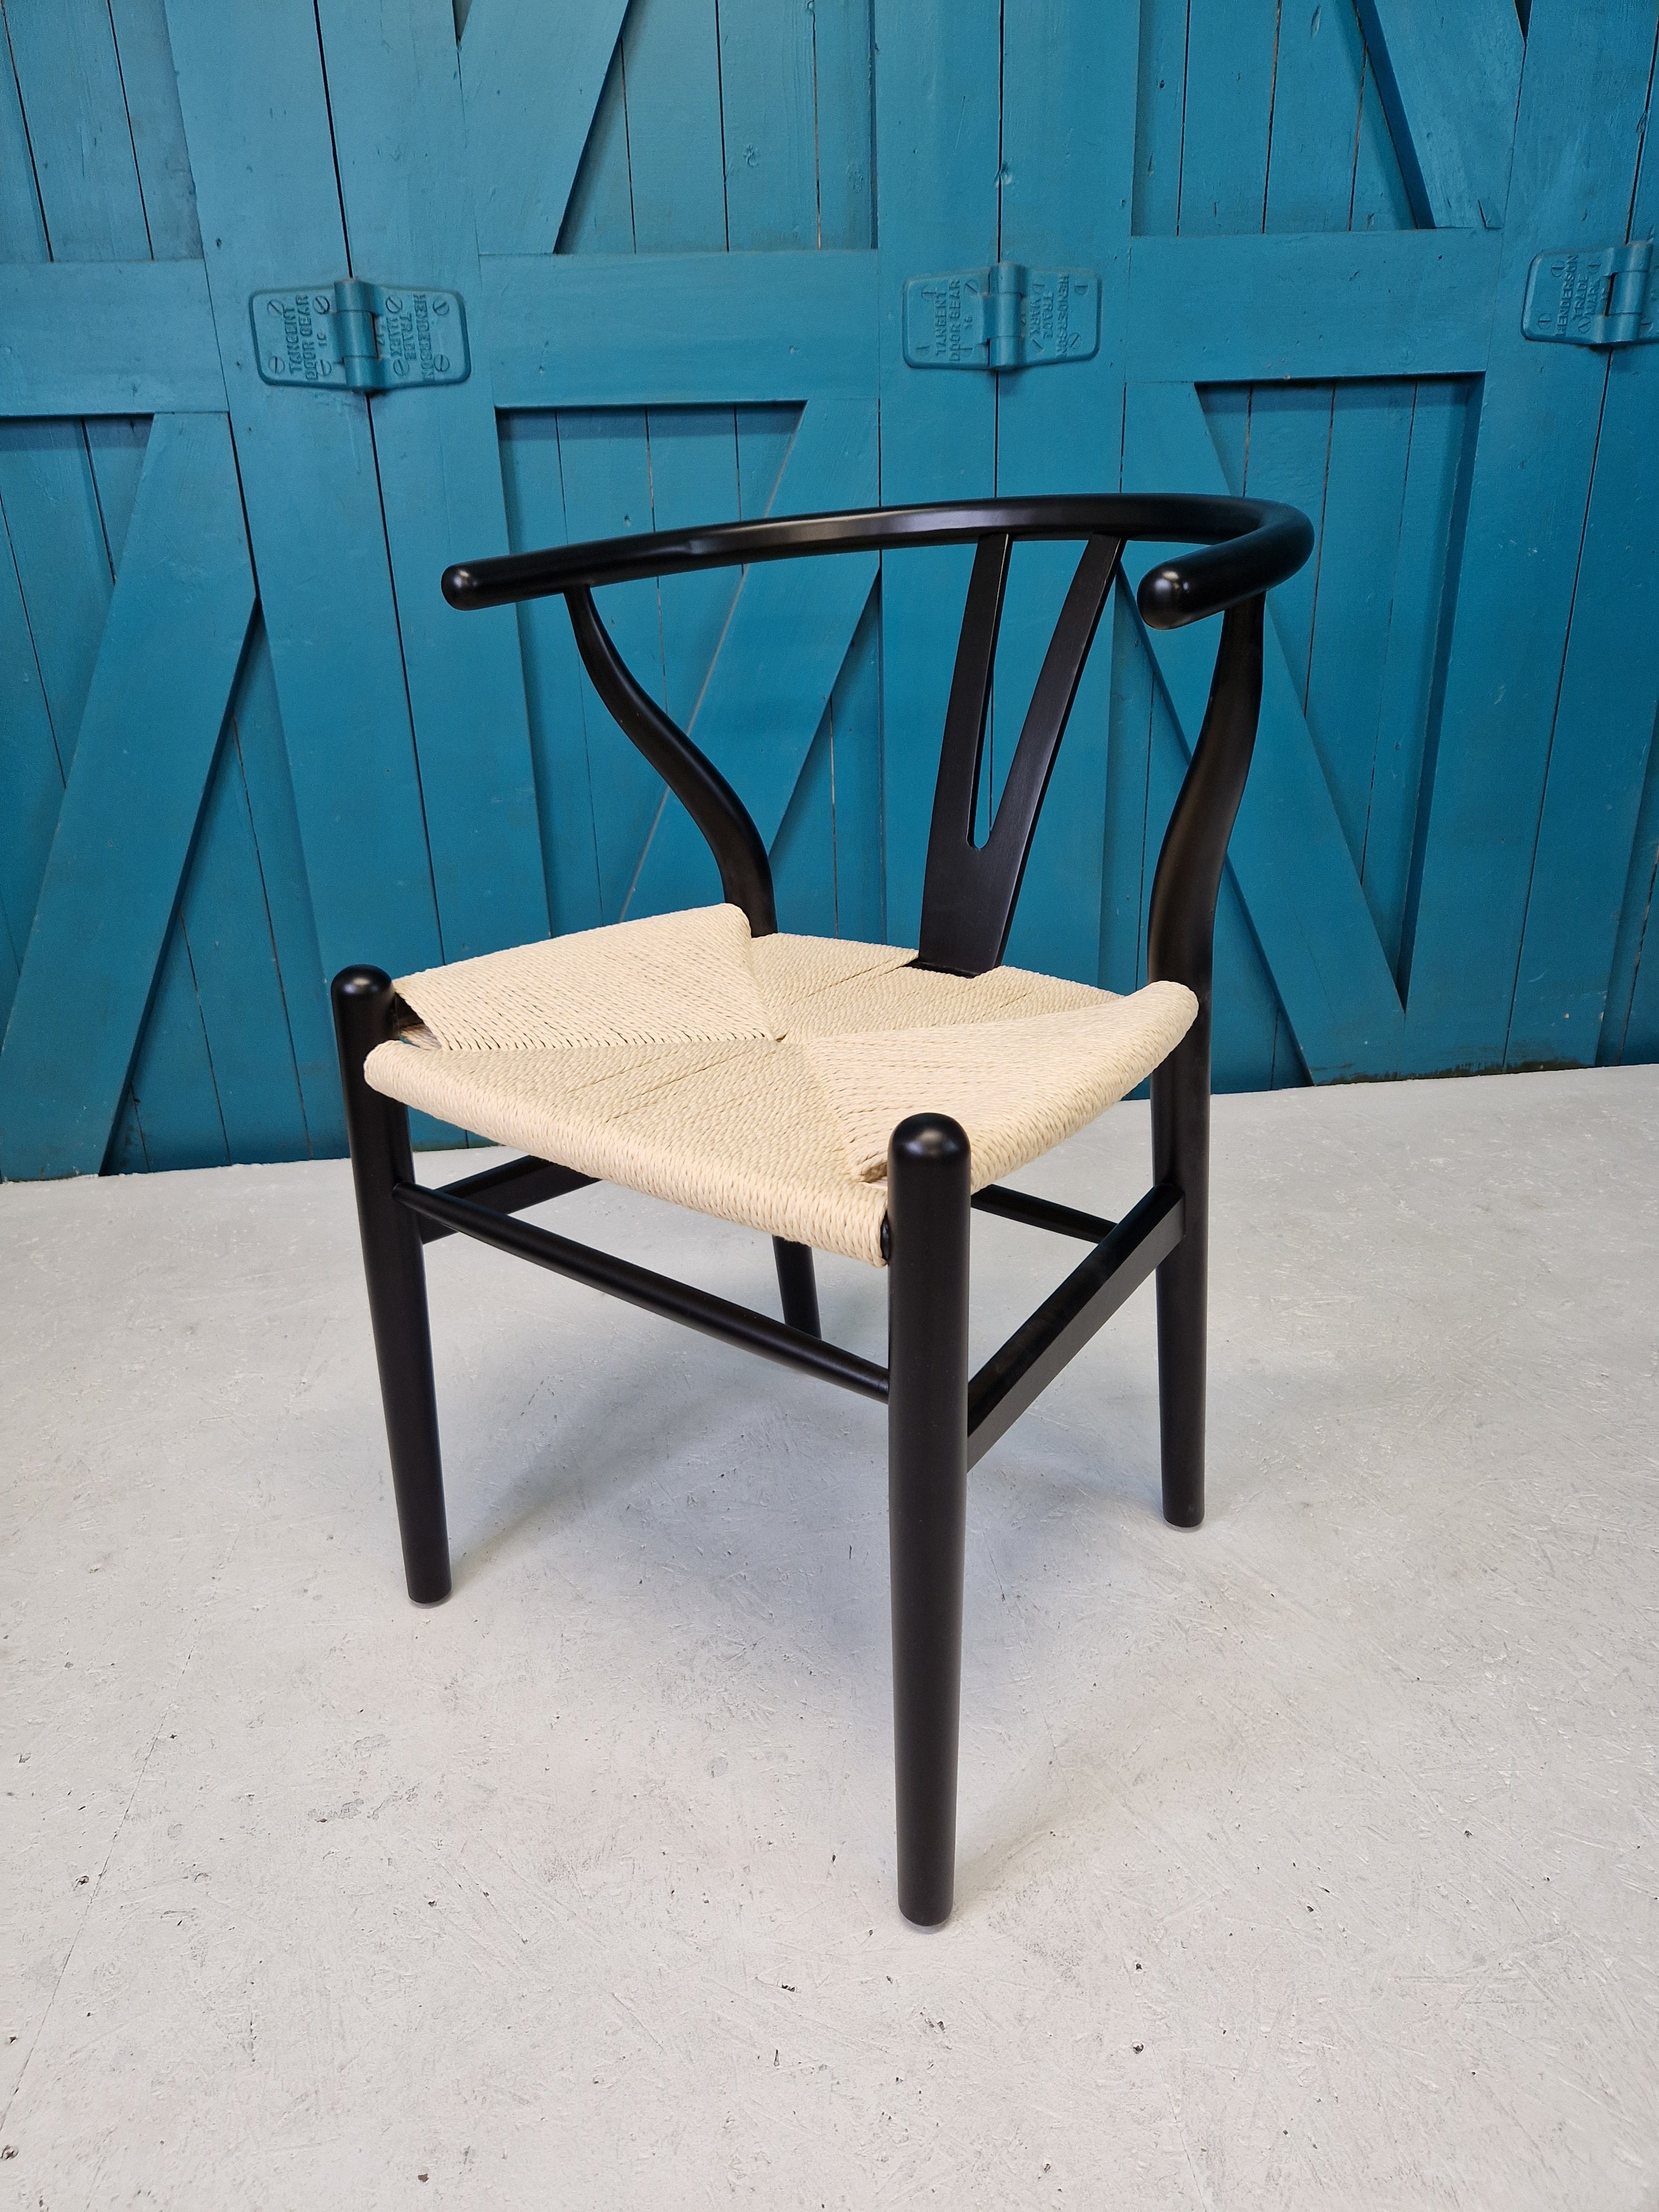 Hans Wegner style Wishbone chair with Black frame, €50 off original price, last few remaining